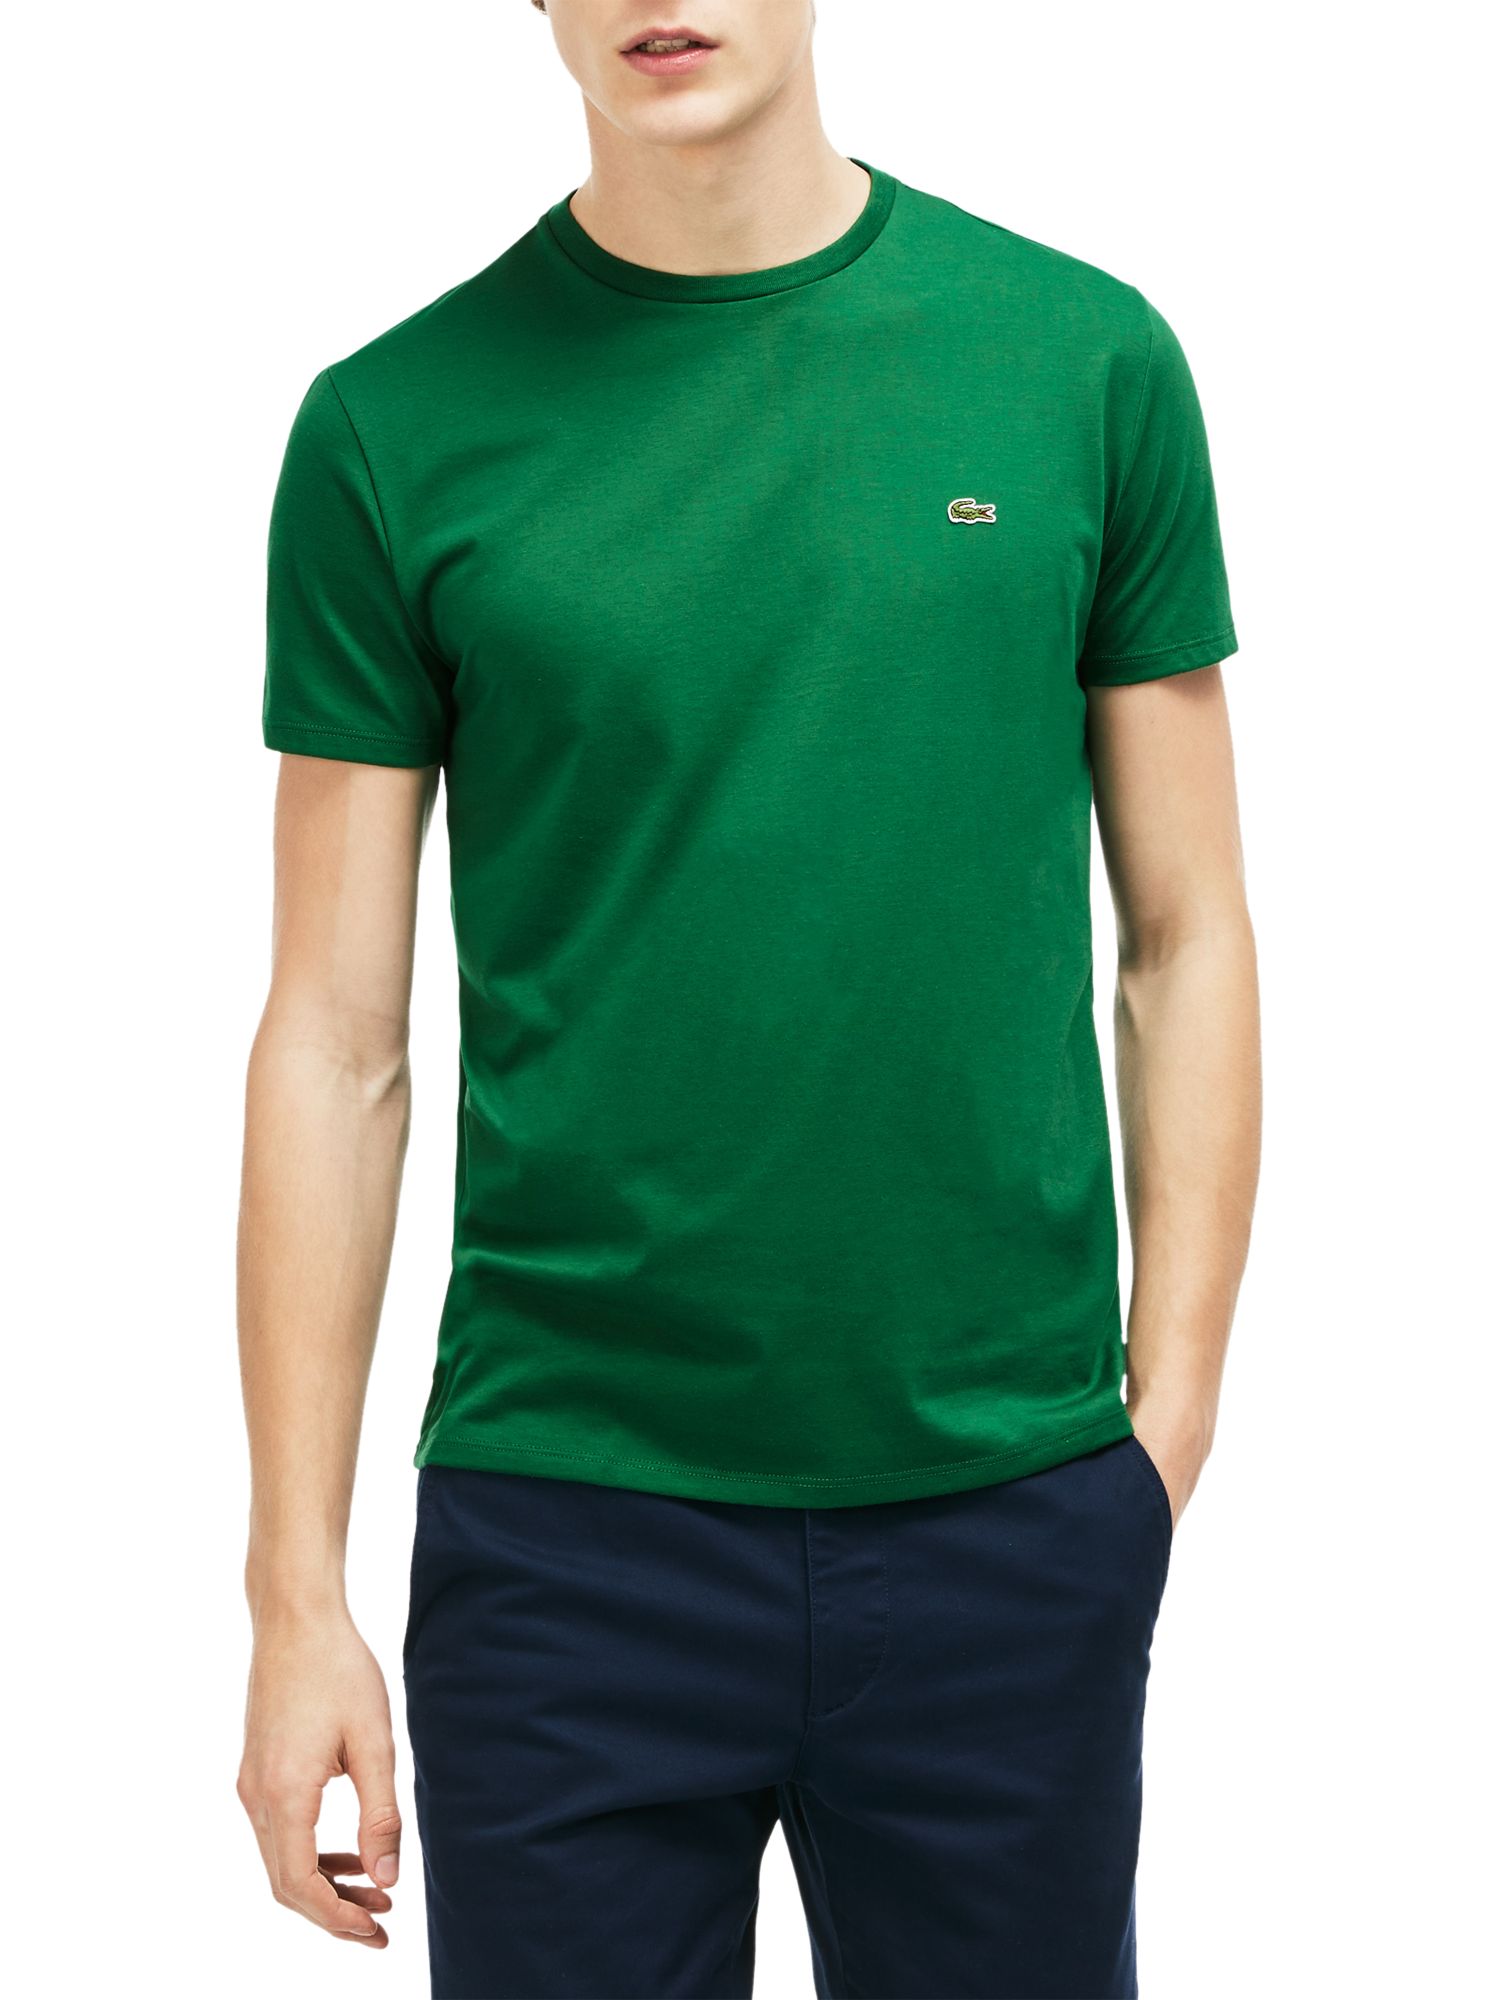 lacoste green t shirt